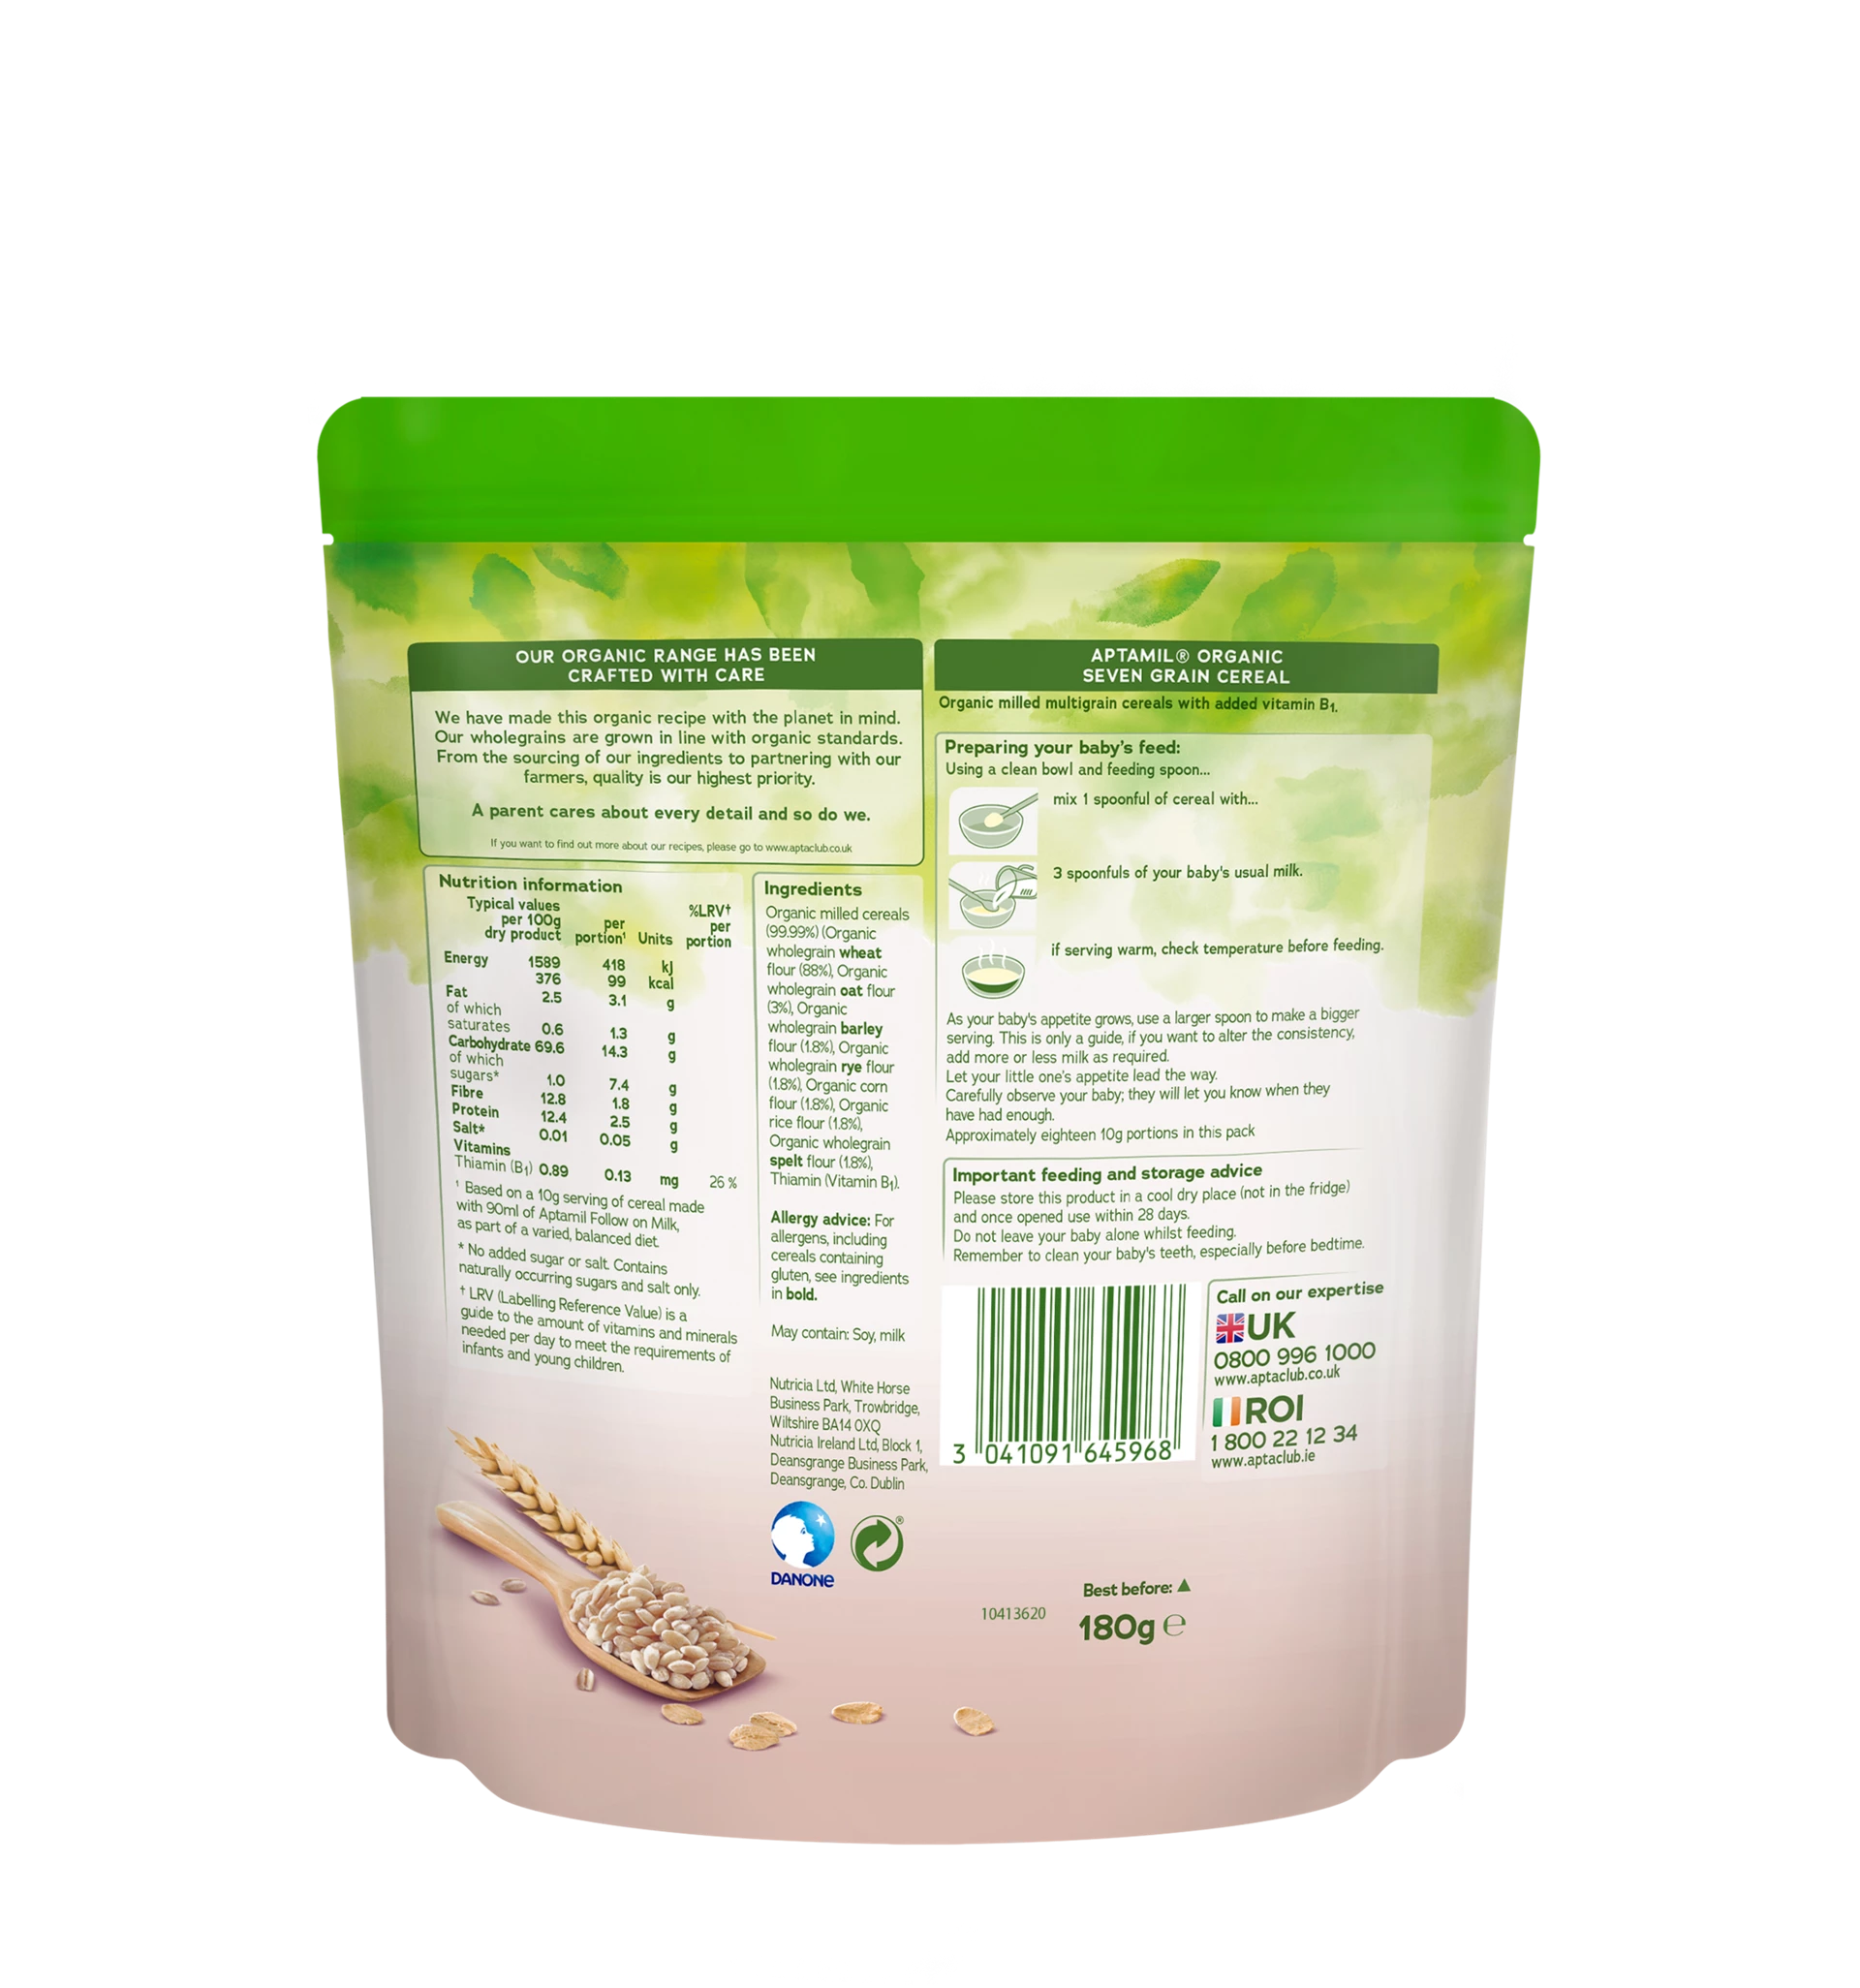 Aptamil® Organic Seven Grain Cereal 180g